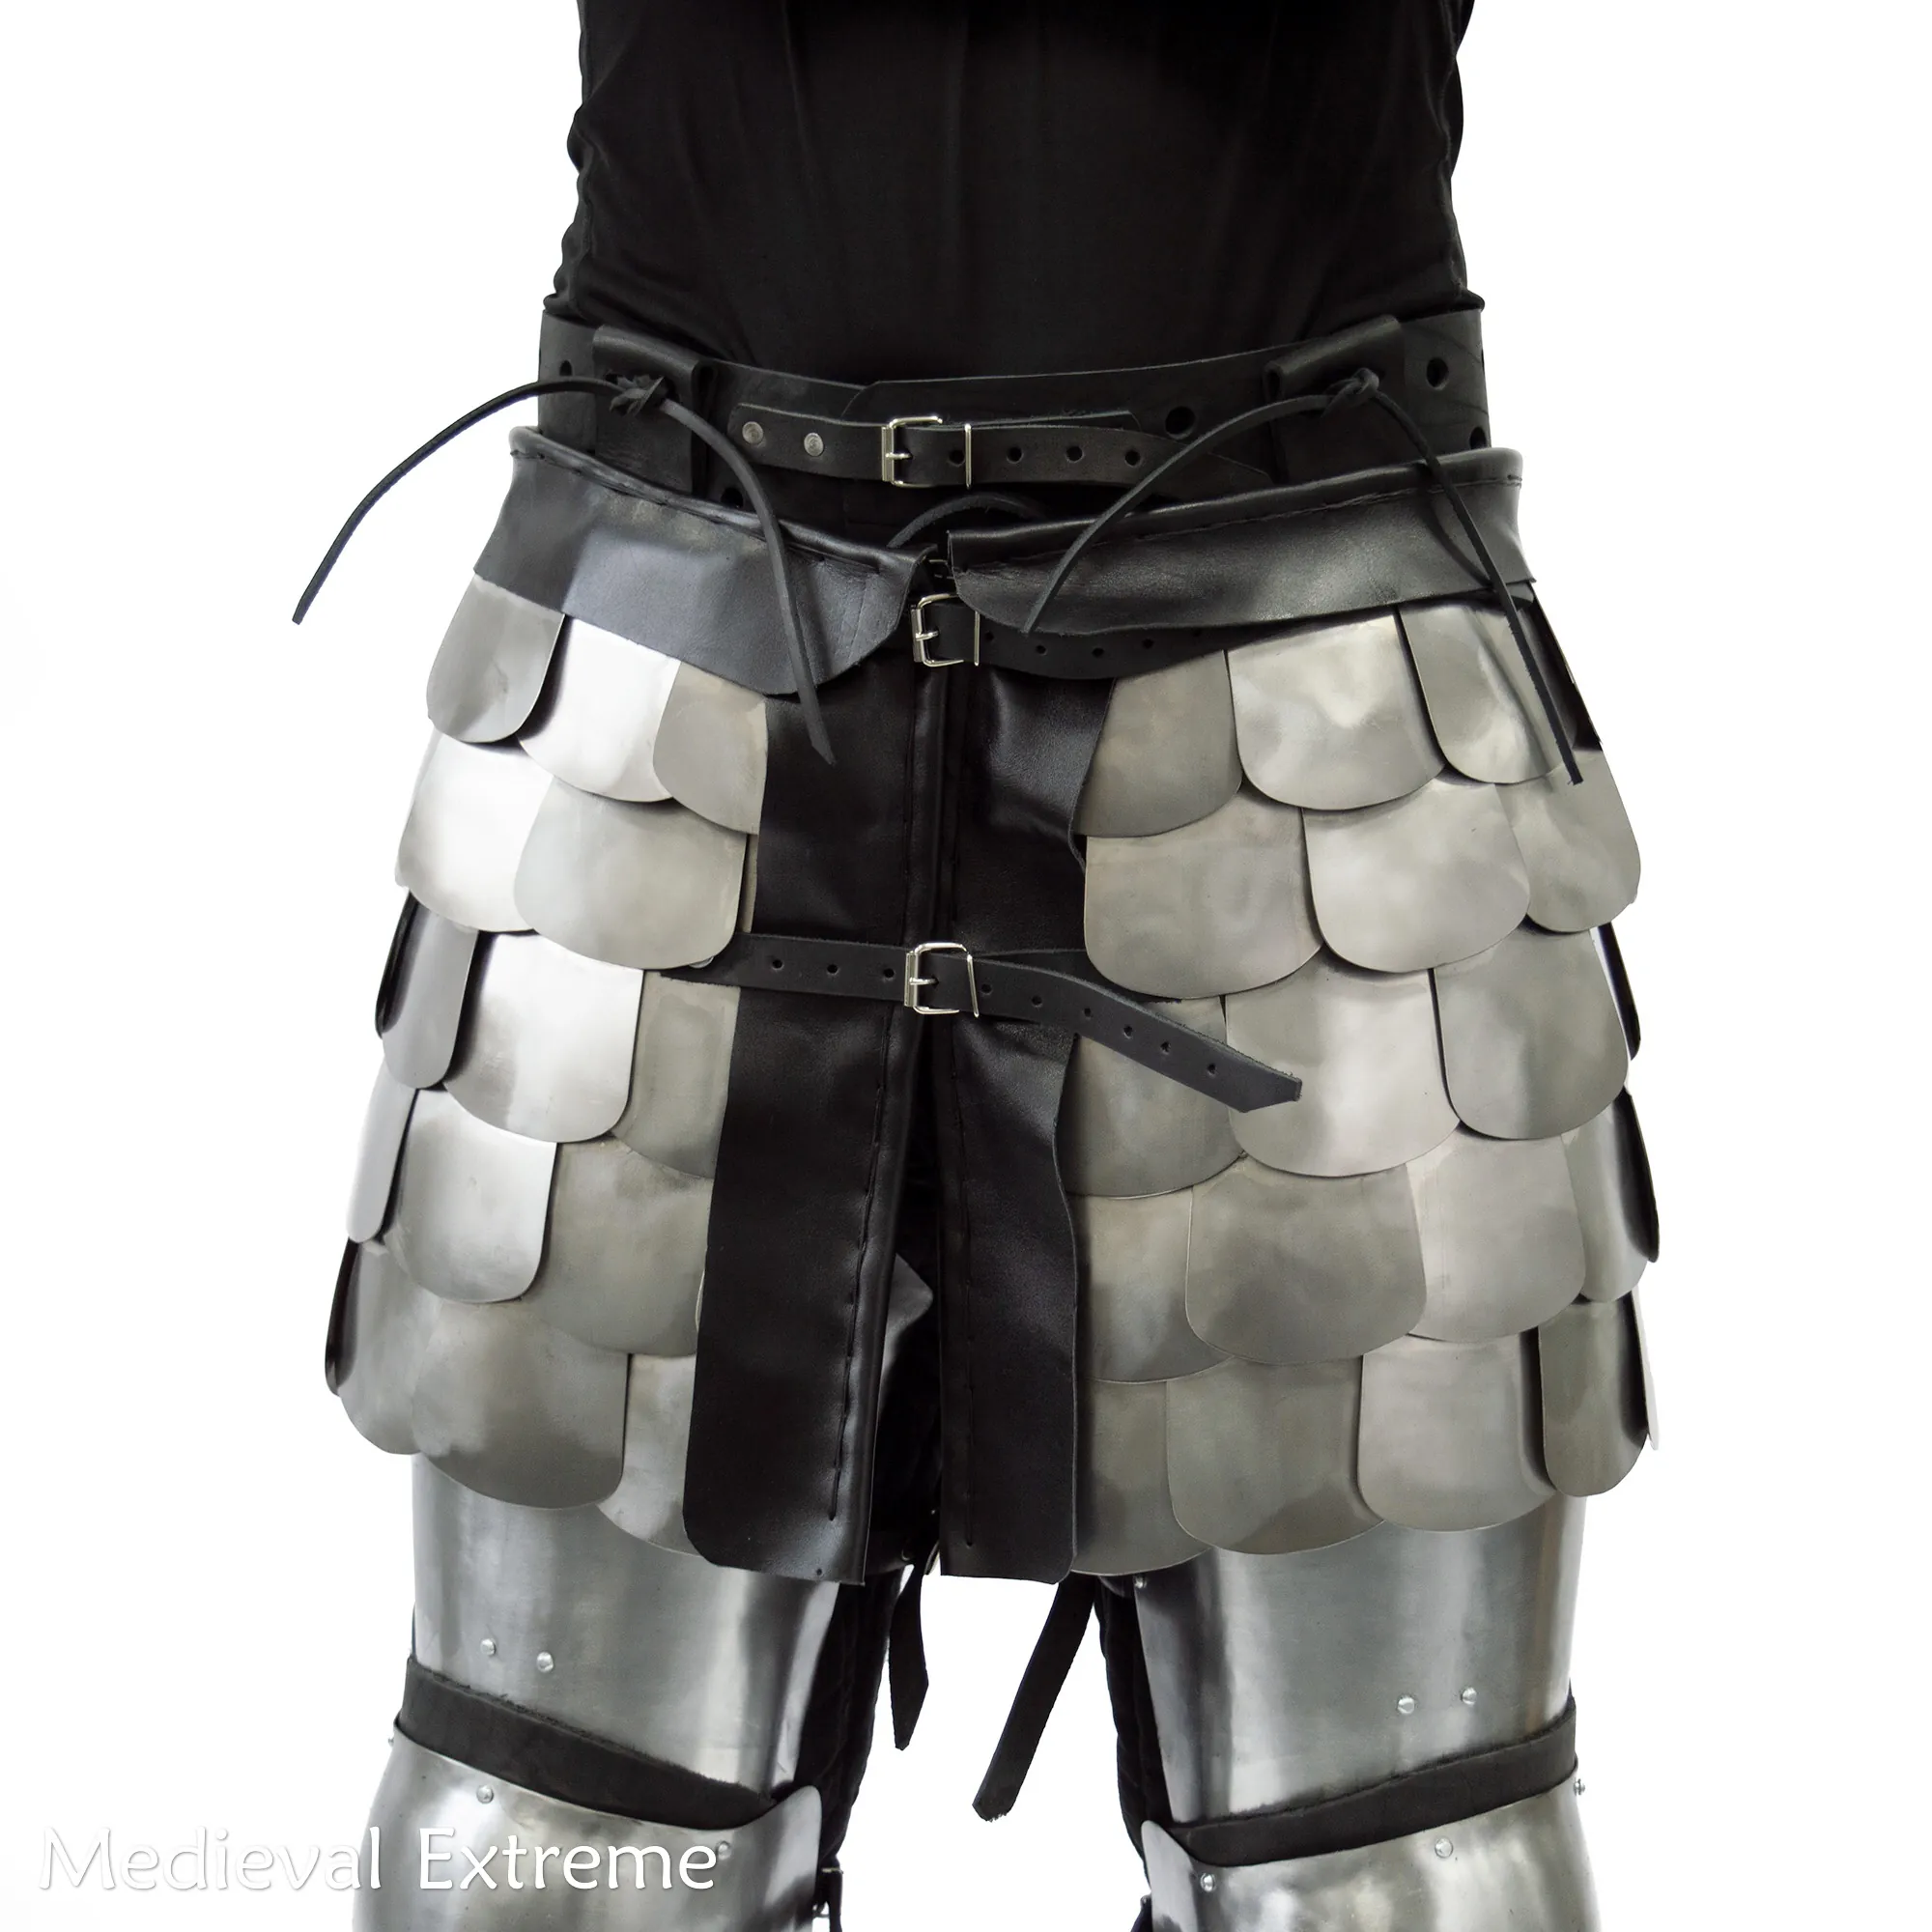 Scale armor skirt for full contact battles front on belt